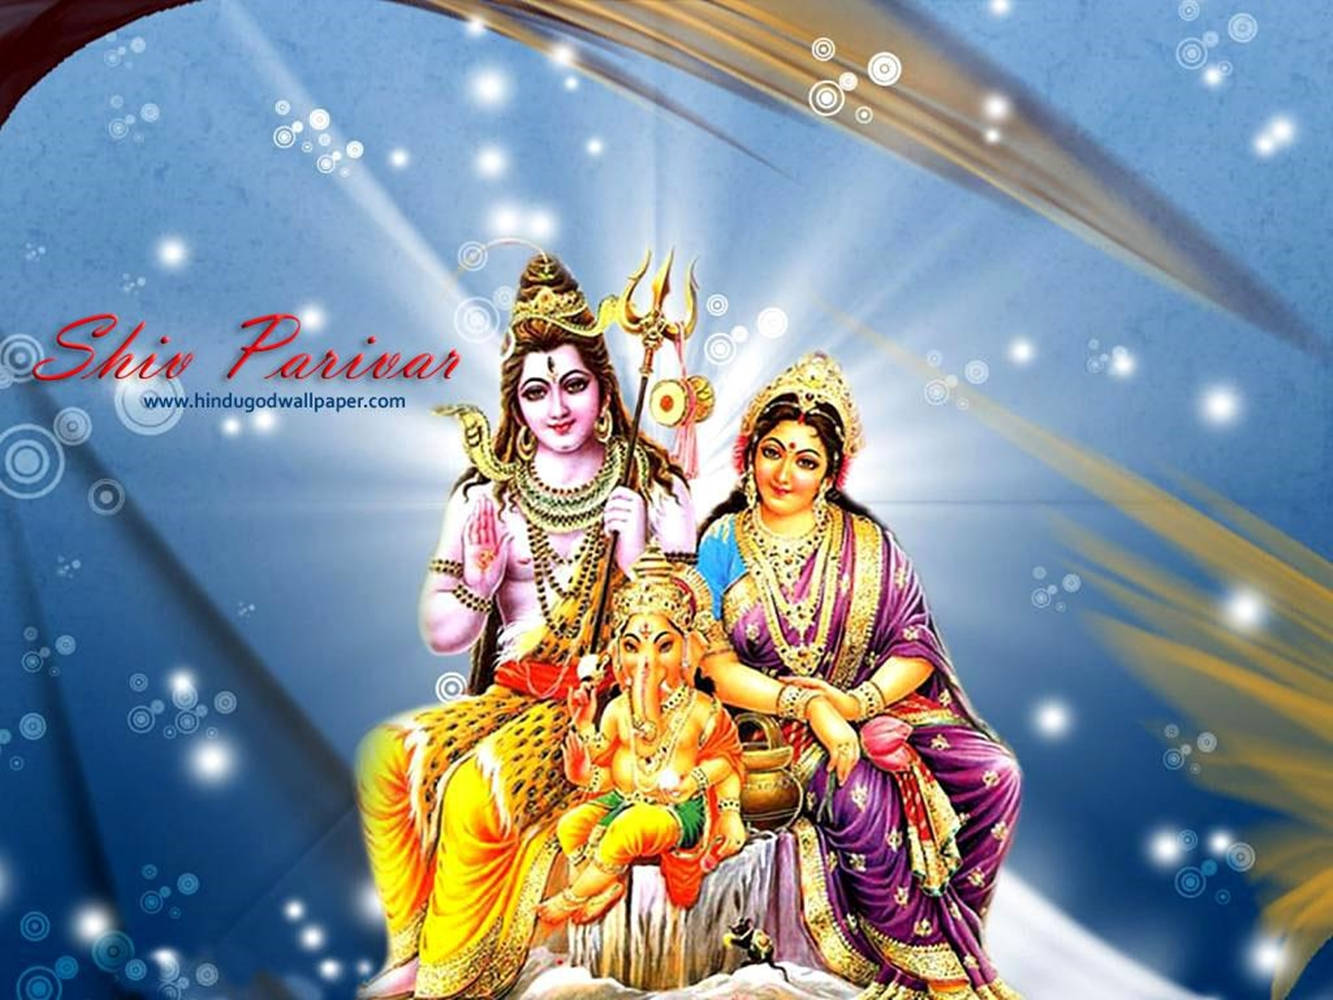 Top 999+ Shiva Parvati Wallpaper Full HD, 4K✅Free to Use